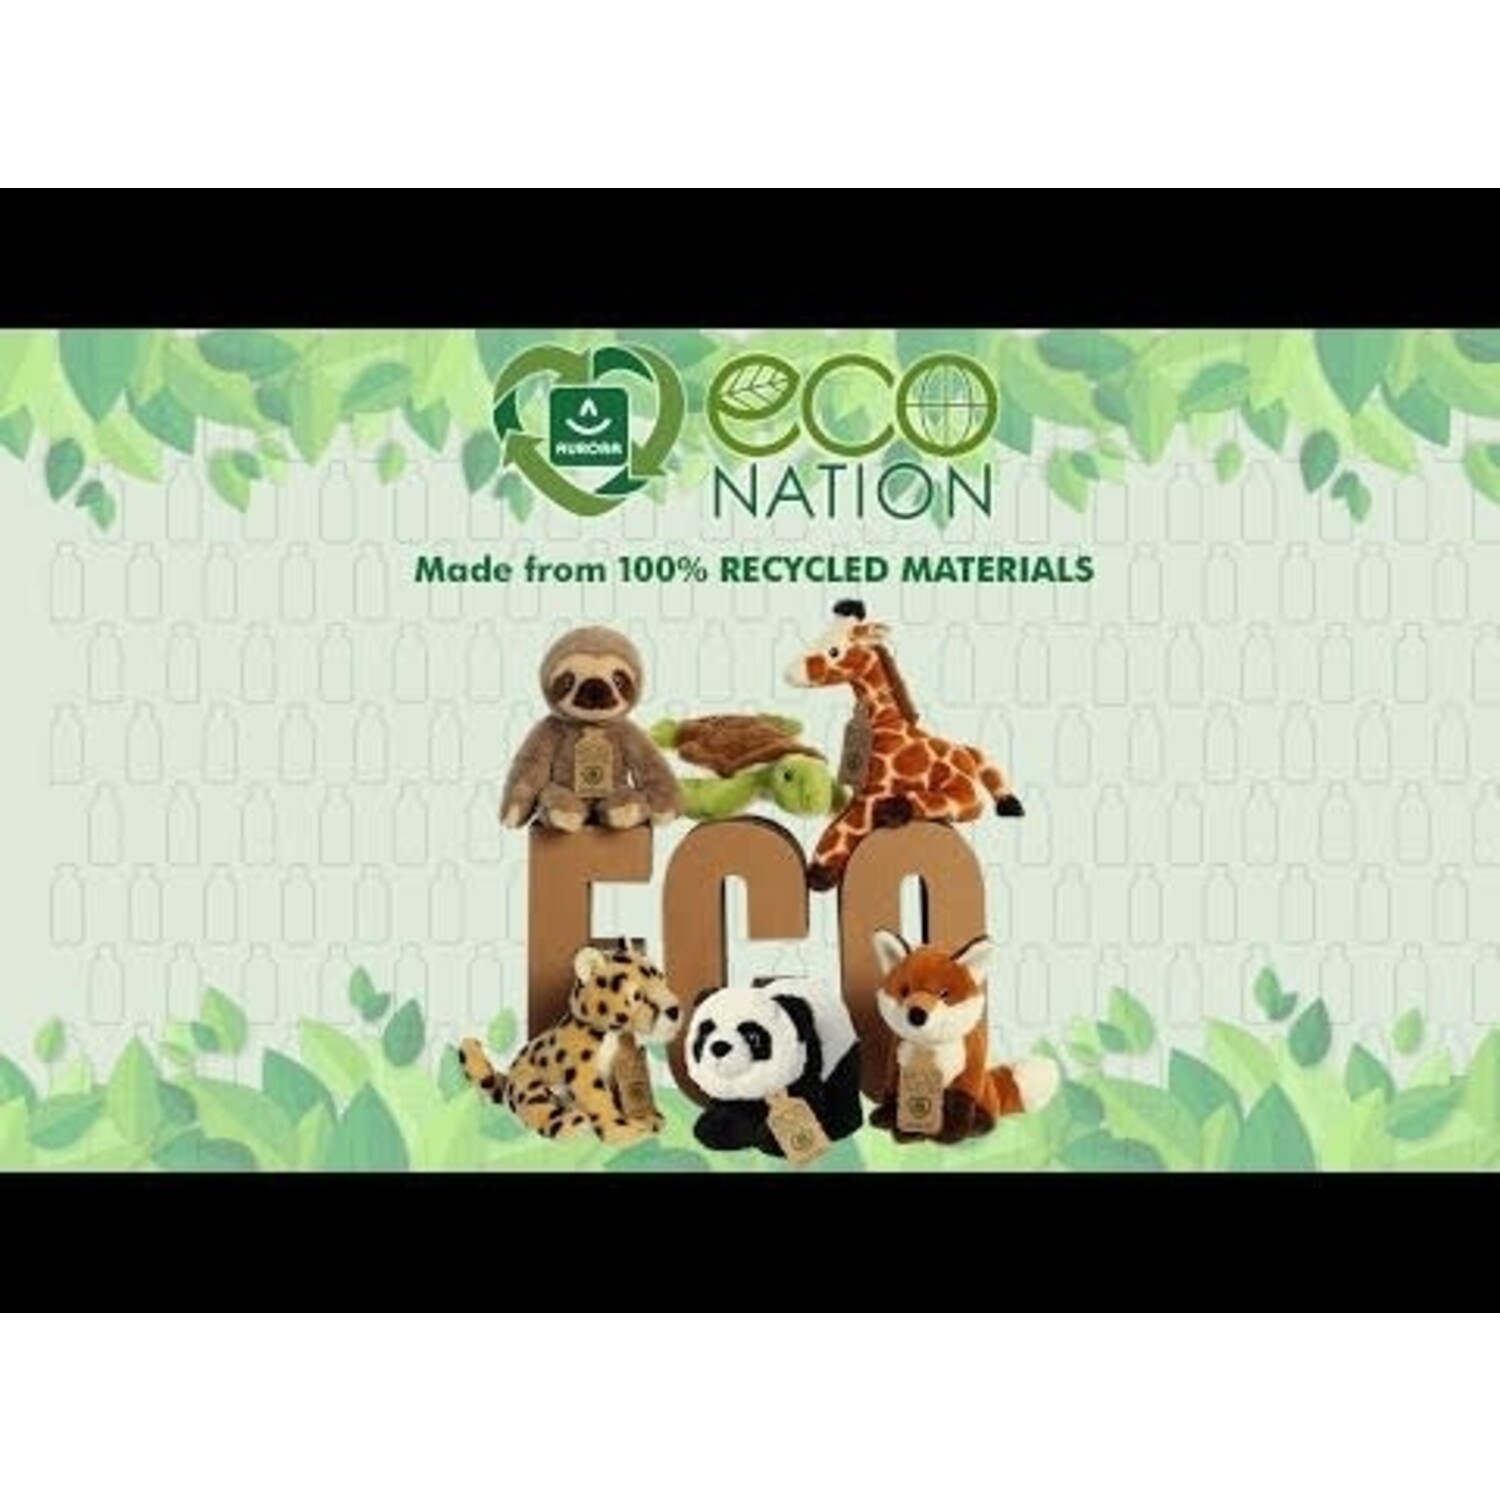 Toy-Eco Plush Animal-Chimpanzee - PLENTY Mercantile & Event Venue